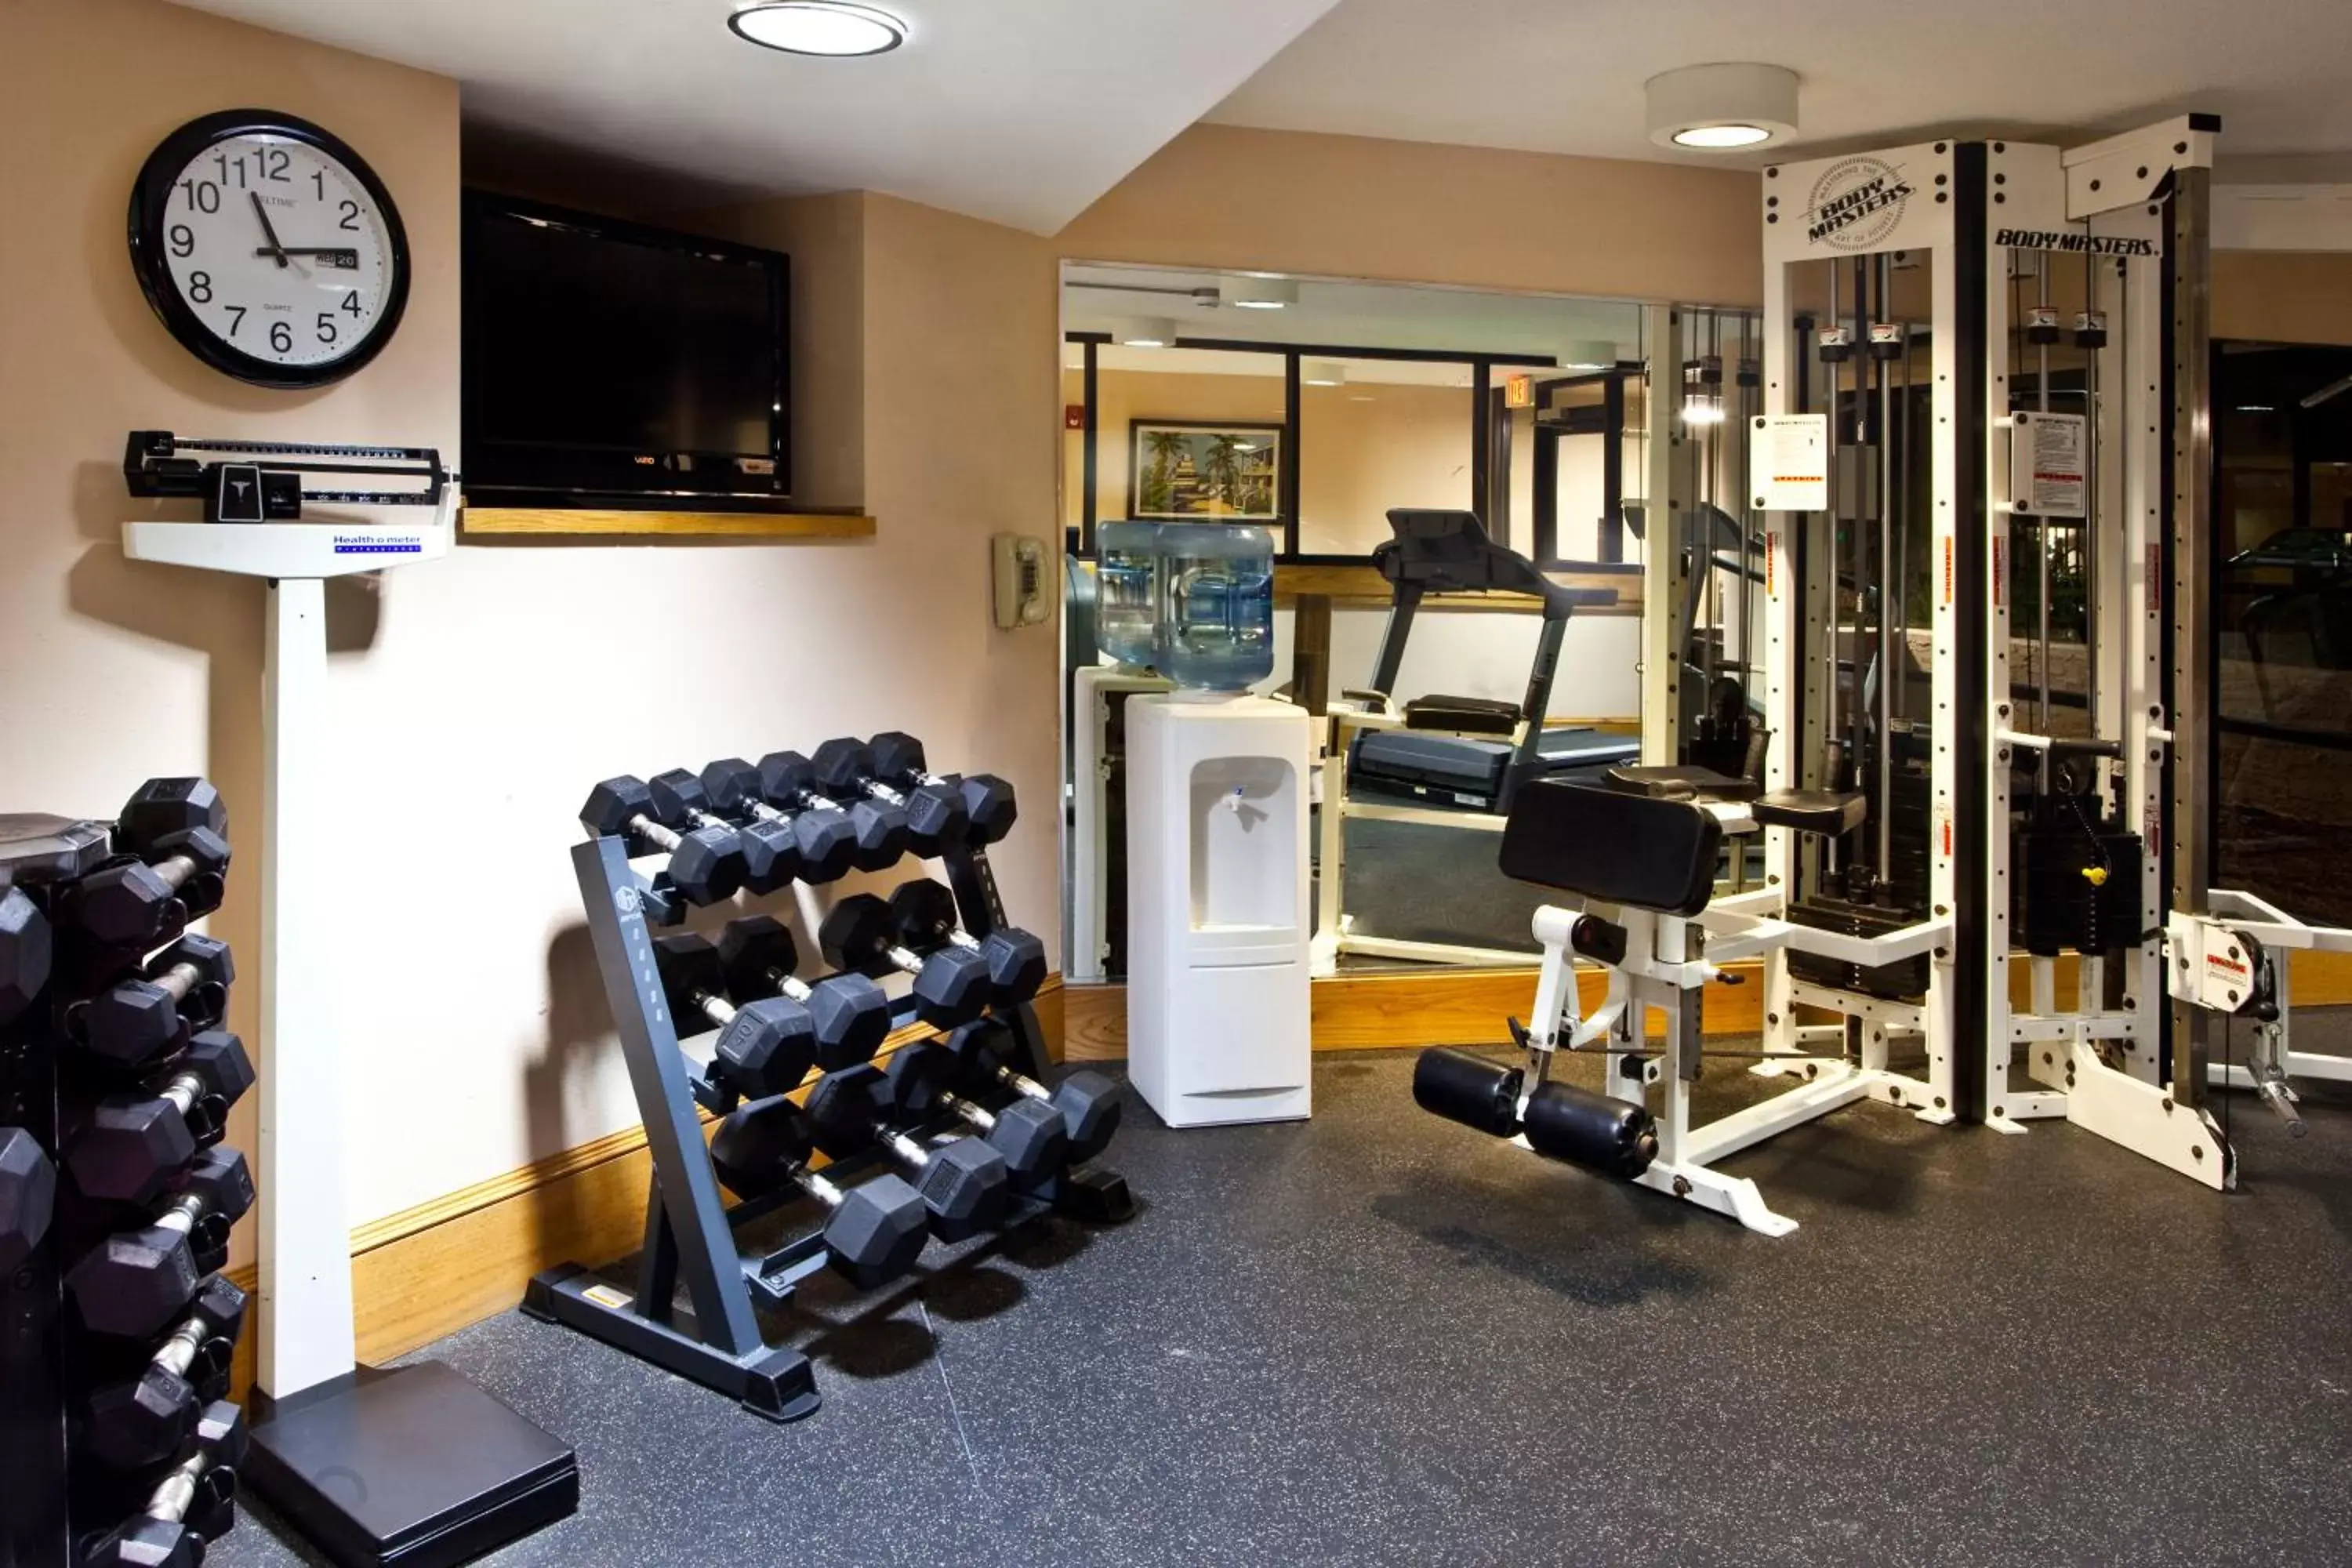 Fitness centre/facilities, Fitness Center/Facilities in Wyndham Garden Fort Walton Beach Destin